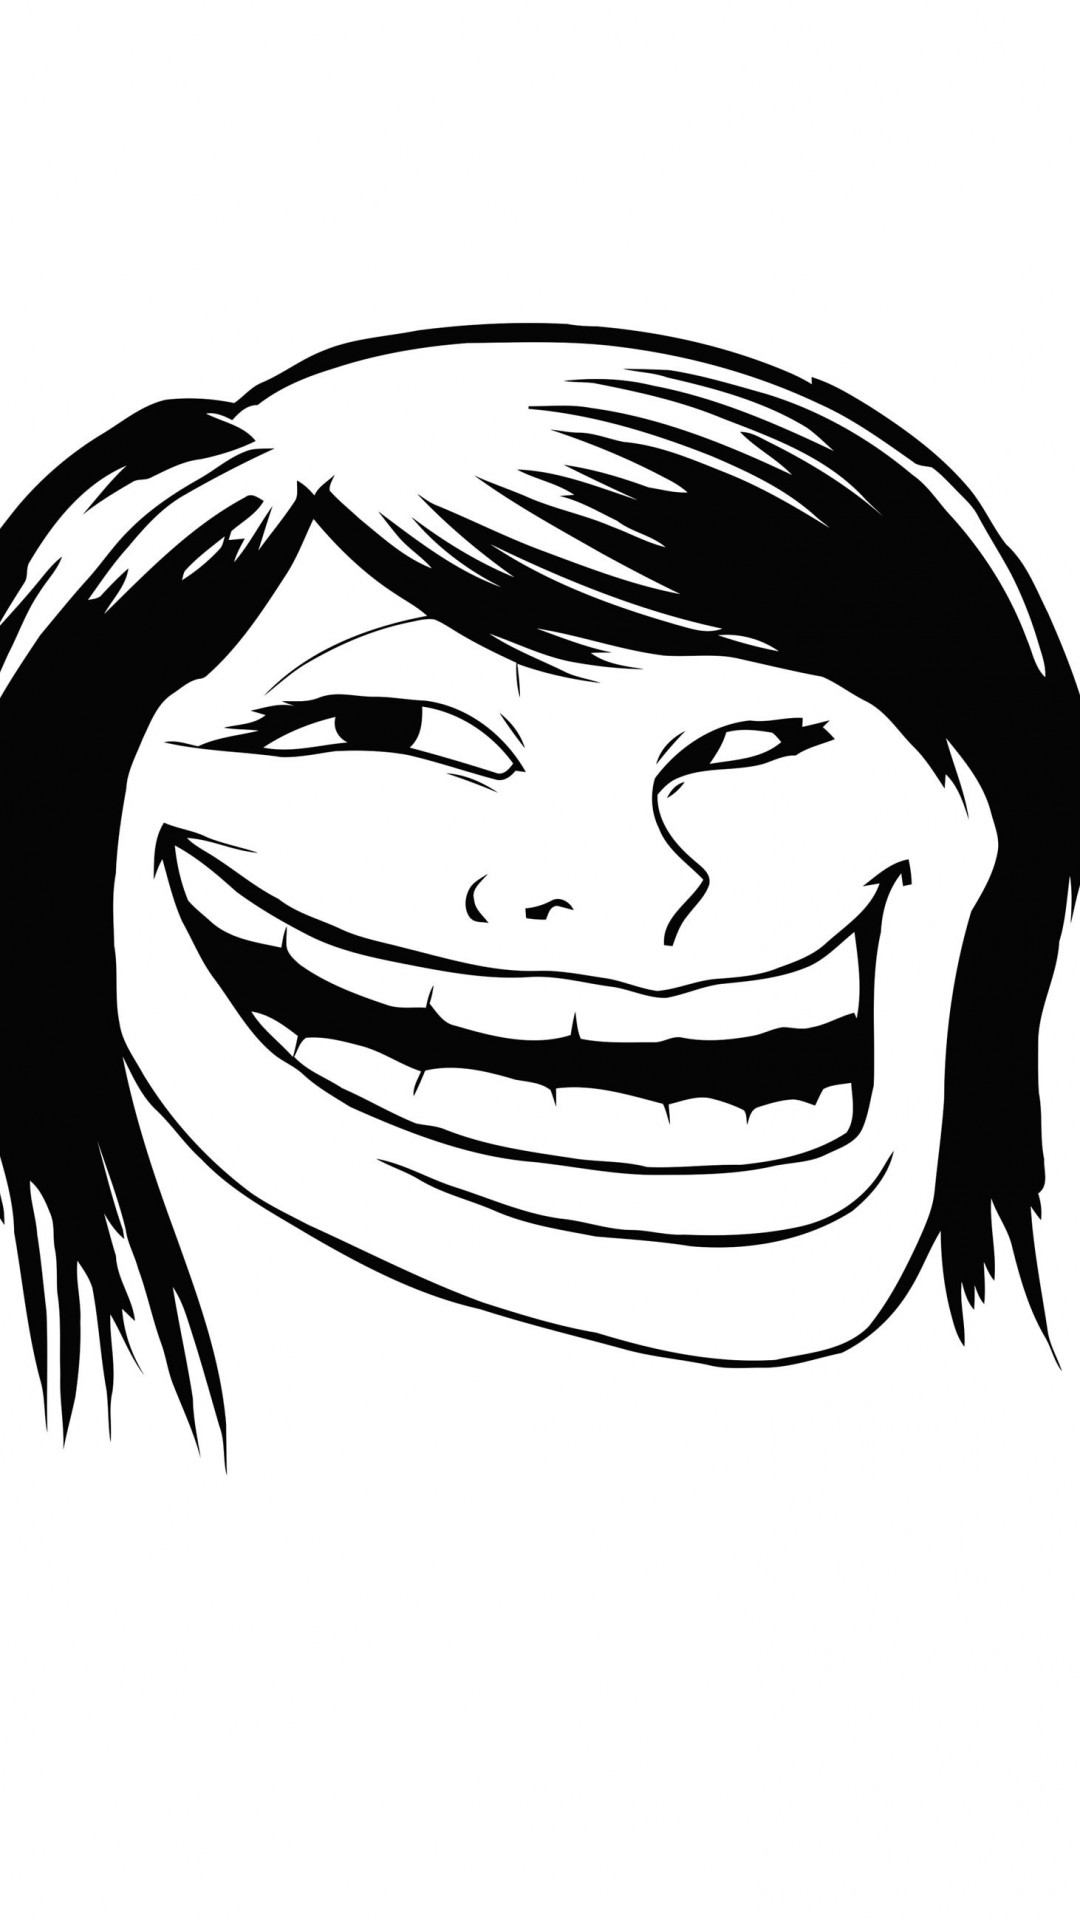 Female Troll Face Meme Wallpaper for SAMSUNG Galaxy Note 3